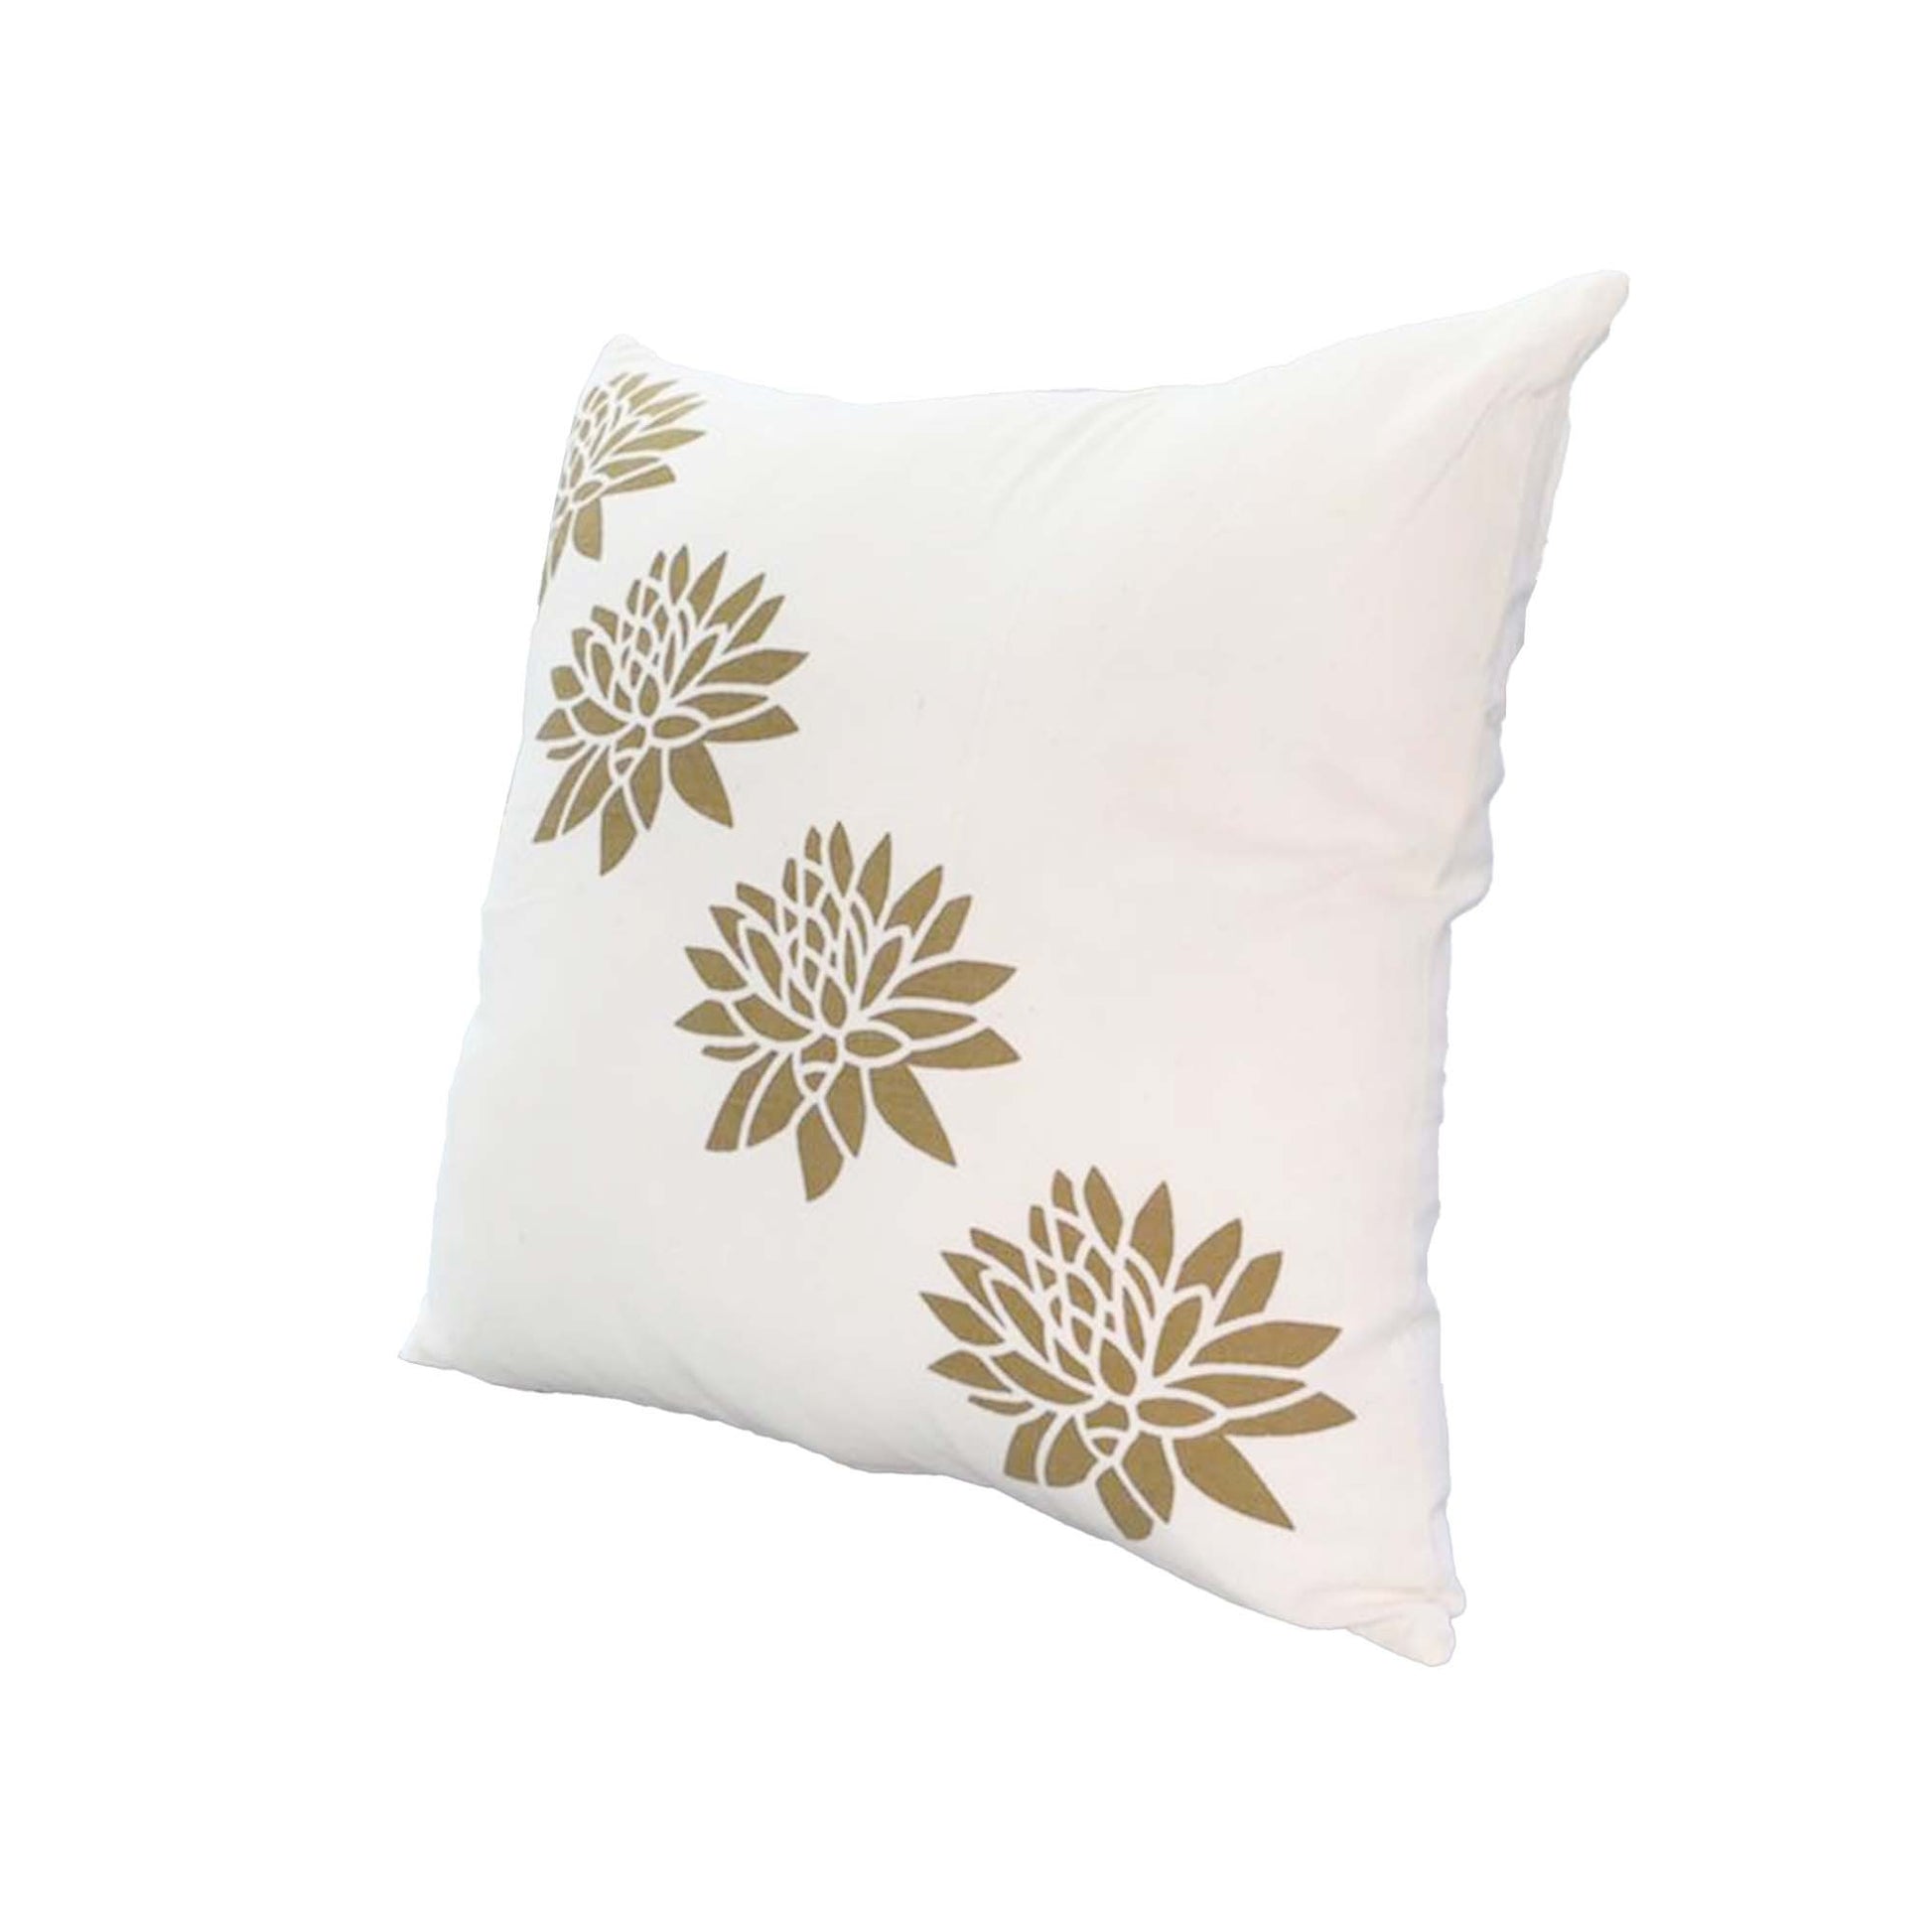 18 x 18 Square Accent Pillow, Soft Cotton Cover white-cotton